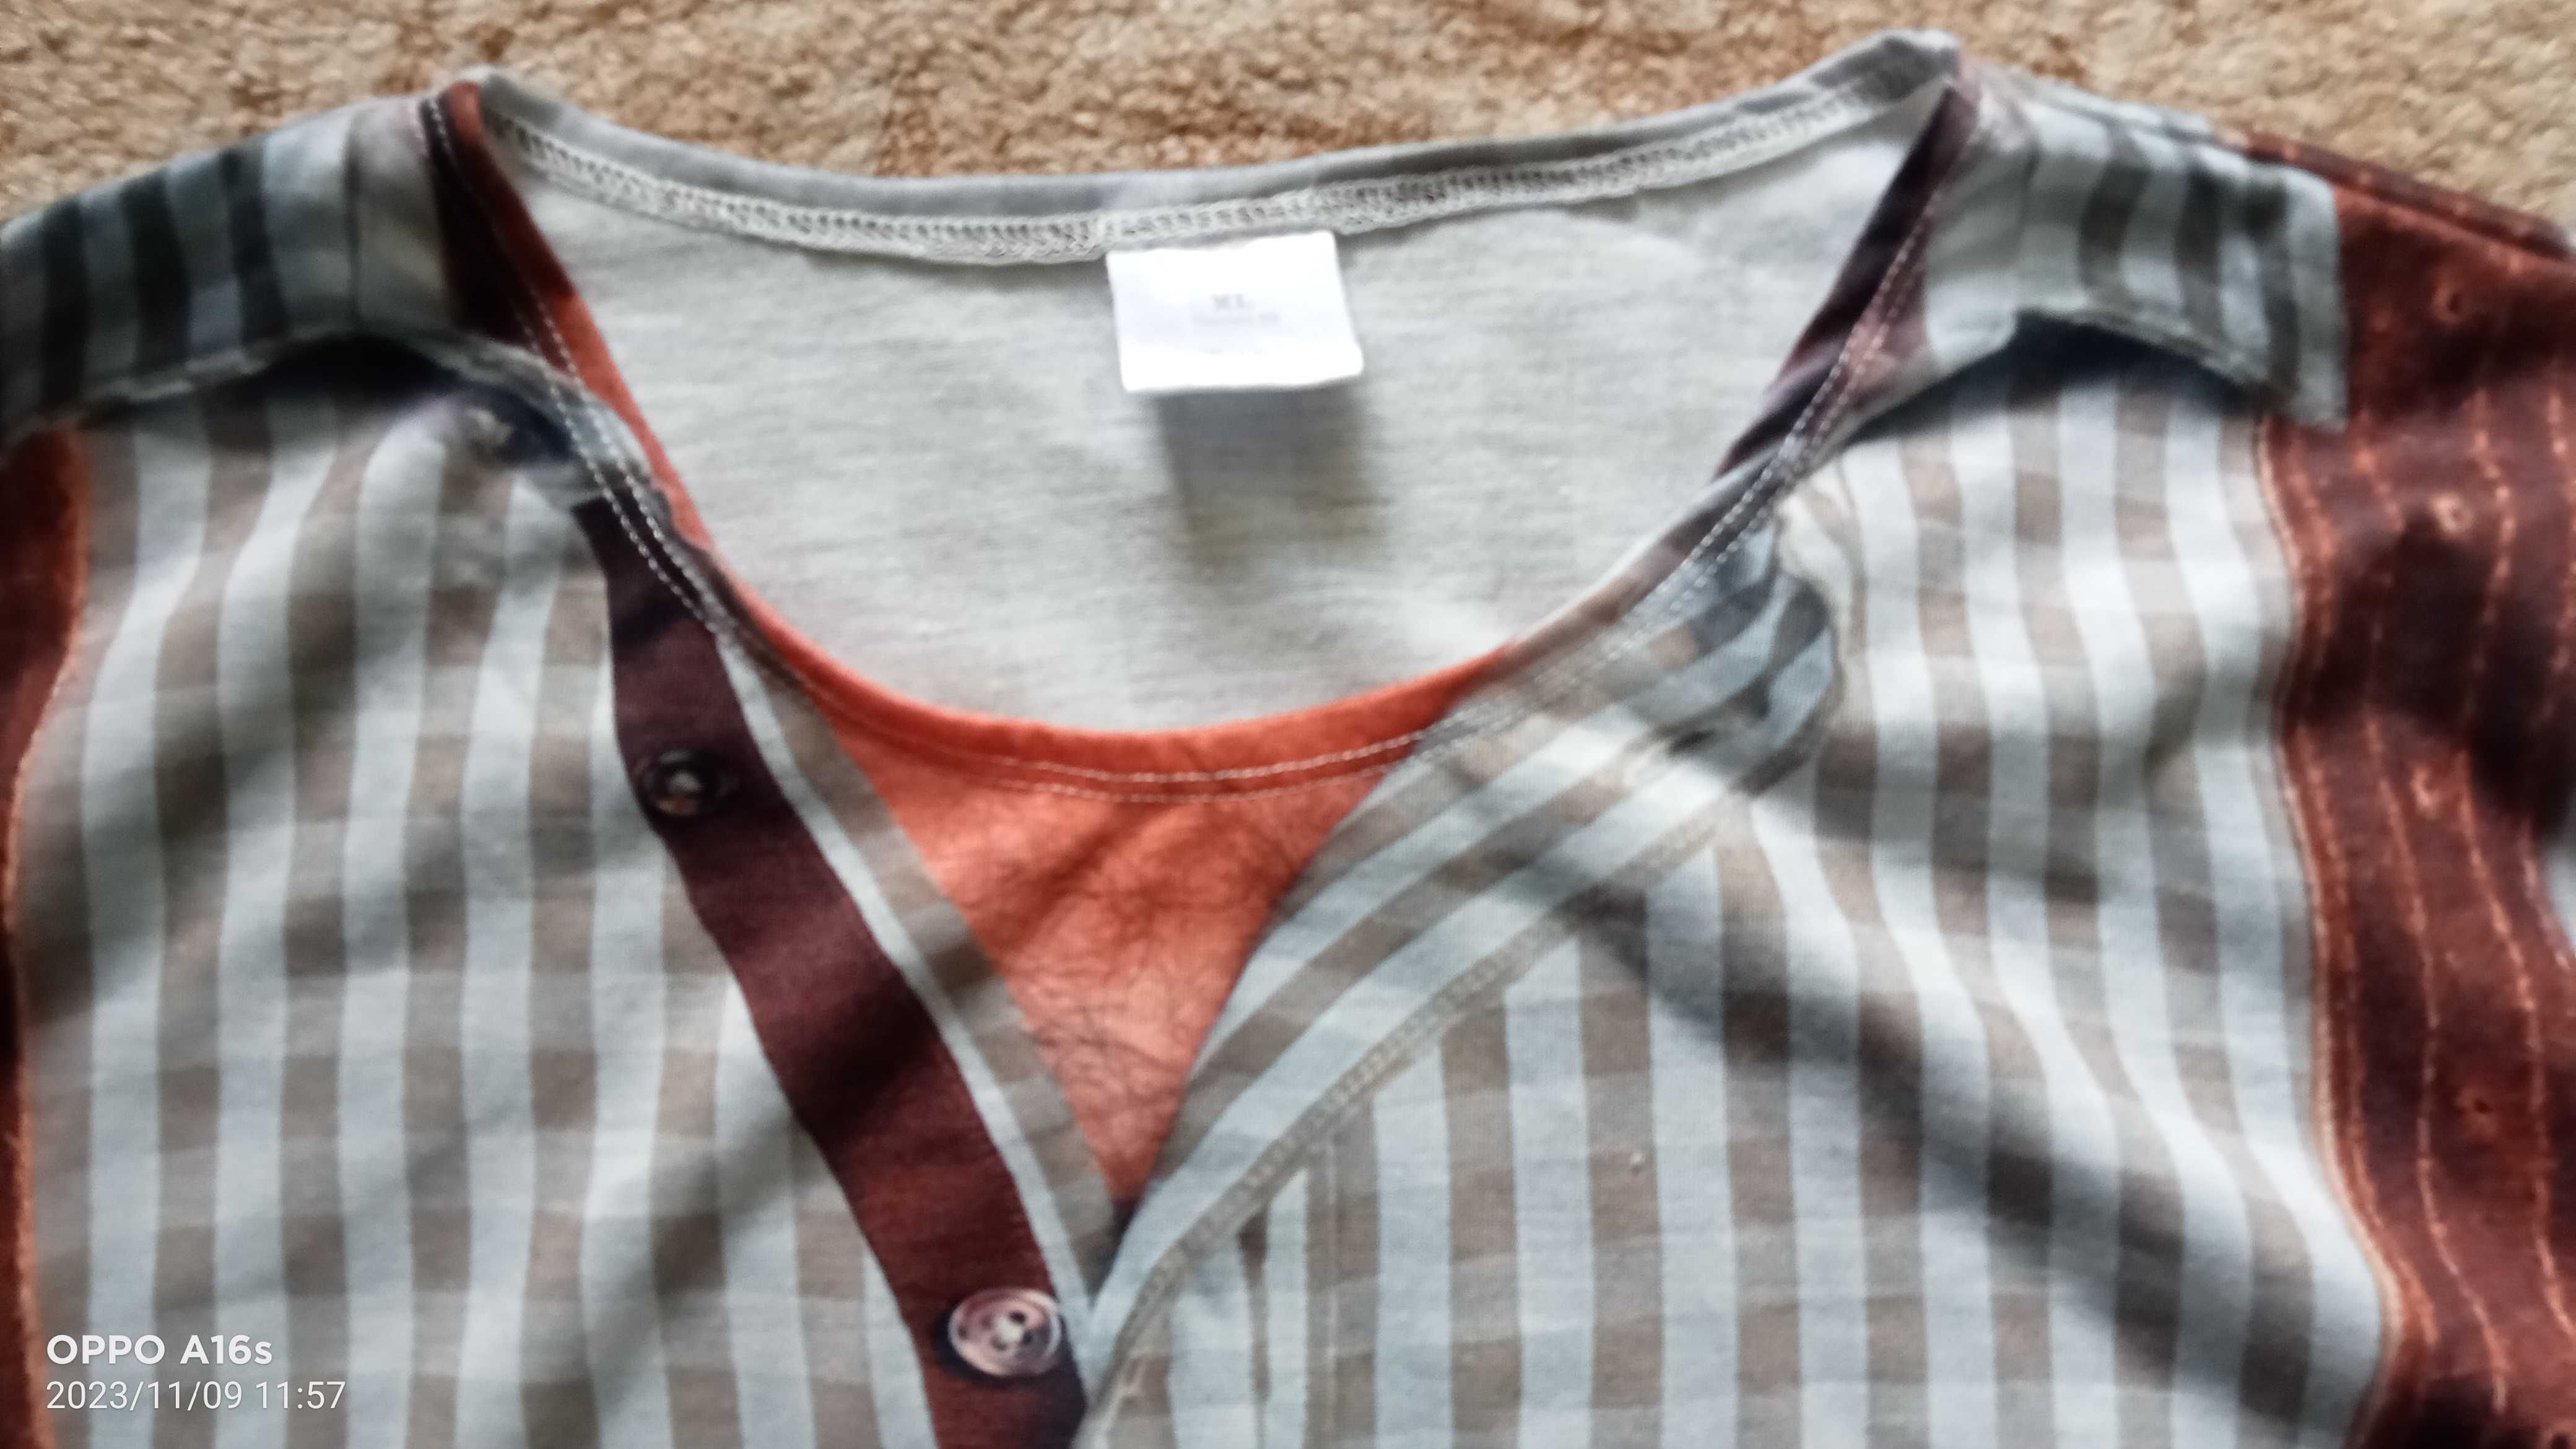 bluza na szelkach z nadrukiem XL oktoberfest koszulka męska